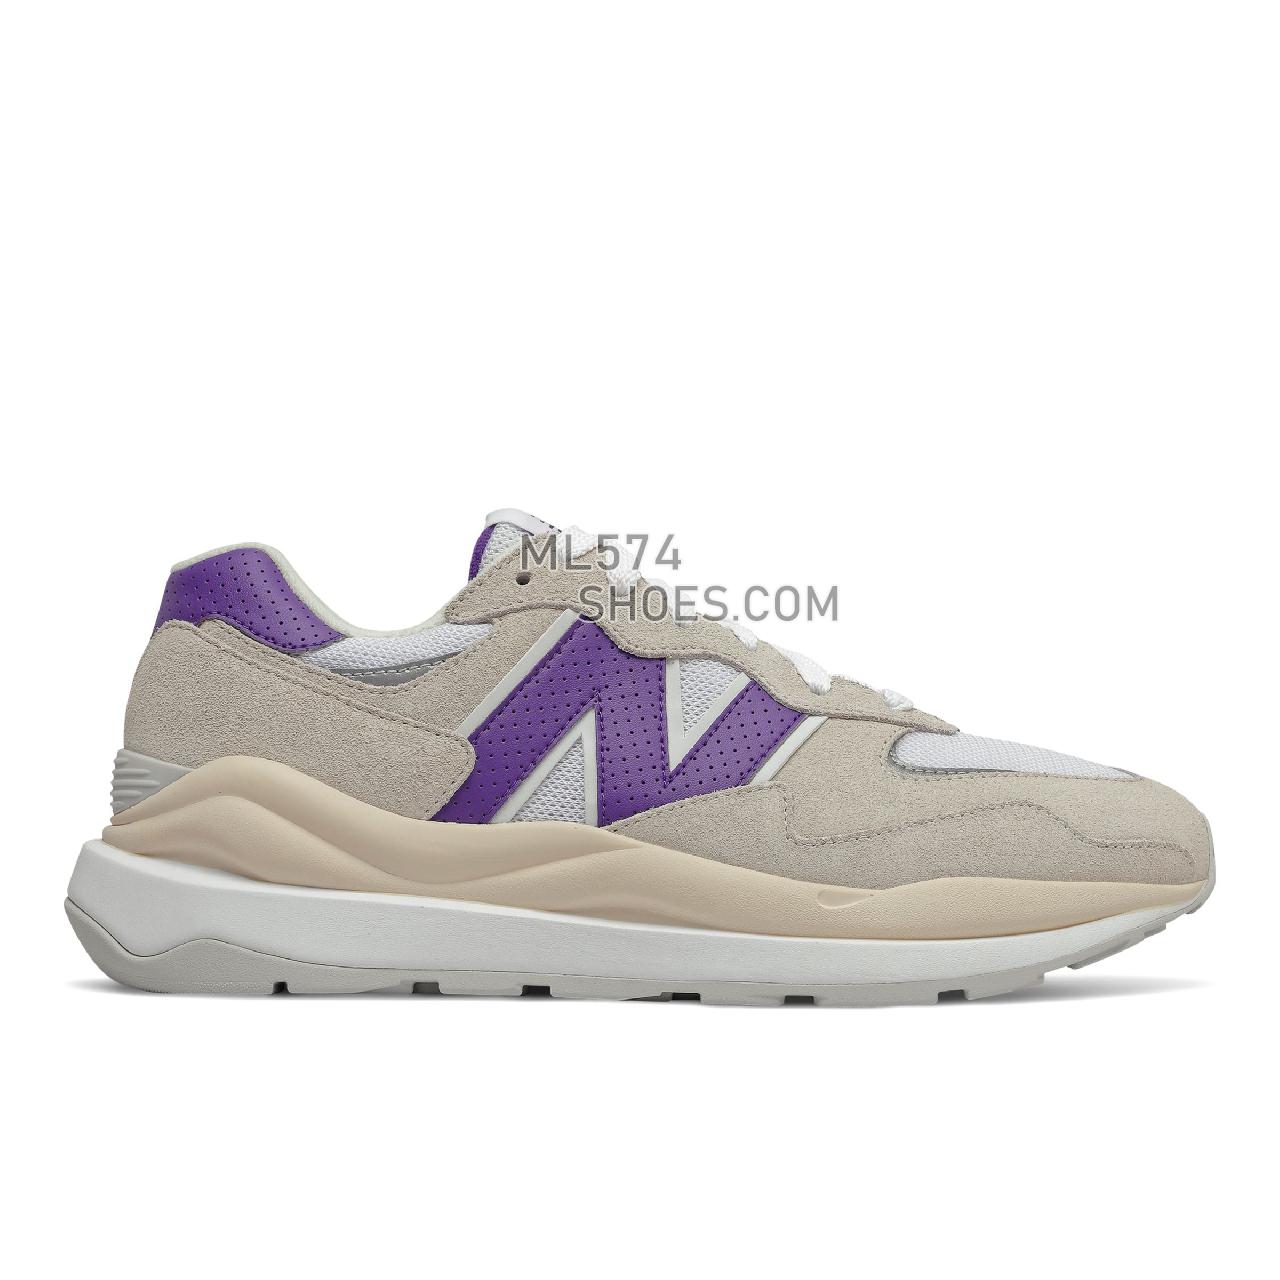 New Balance 57/40 - Men's Sport Style Sneakers - Sea Salt with Prism Purple - M5740SB1